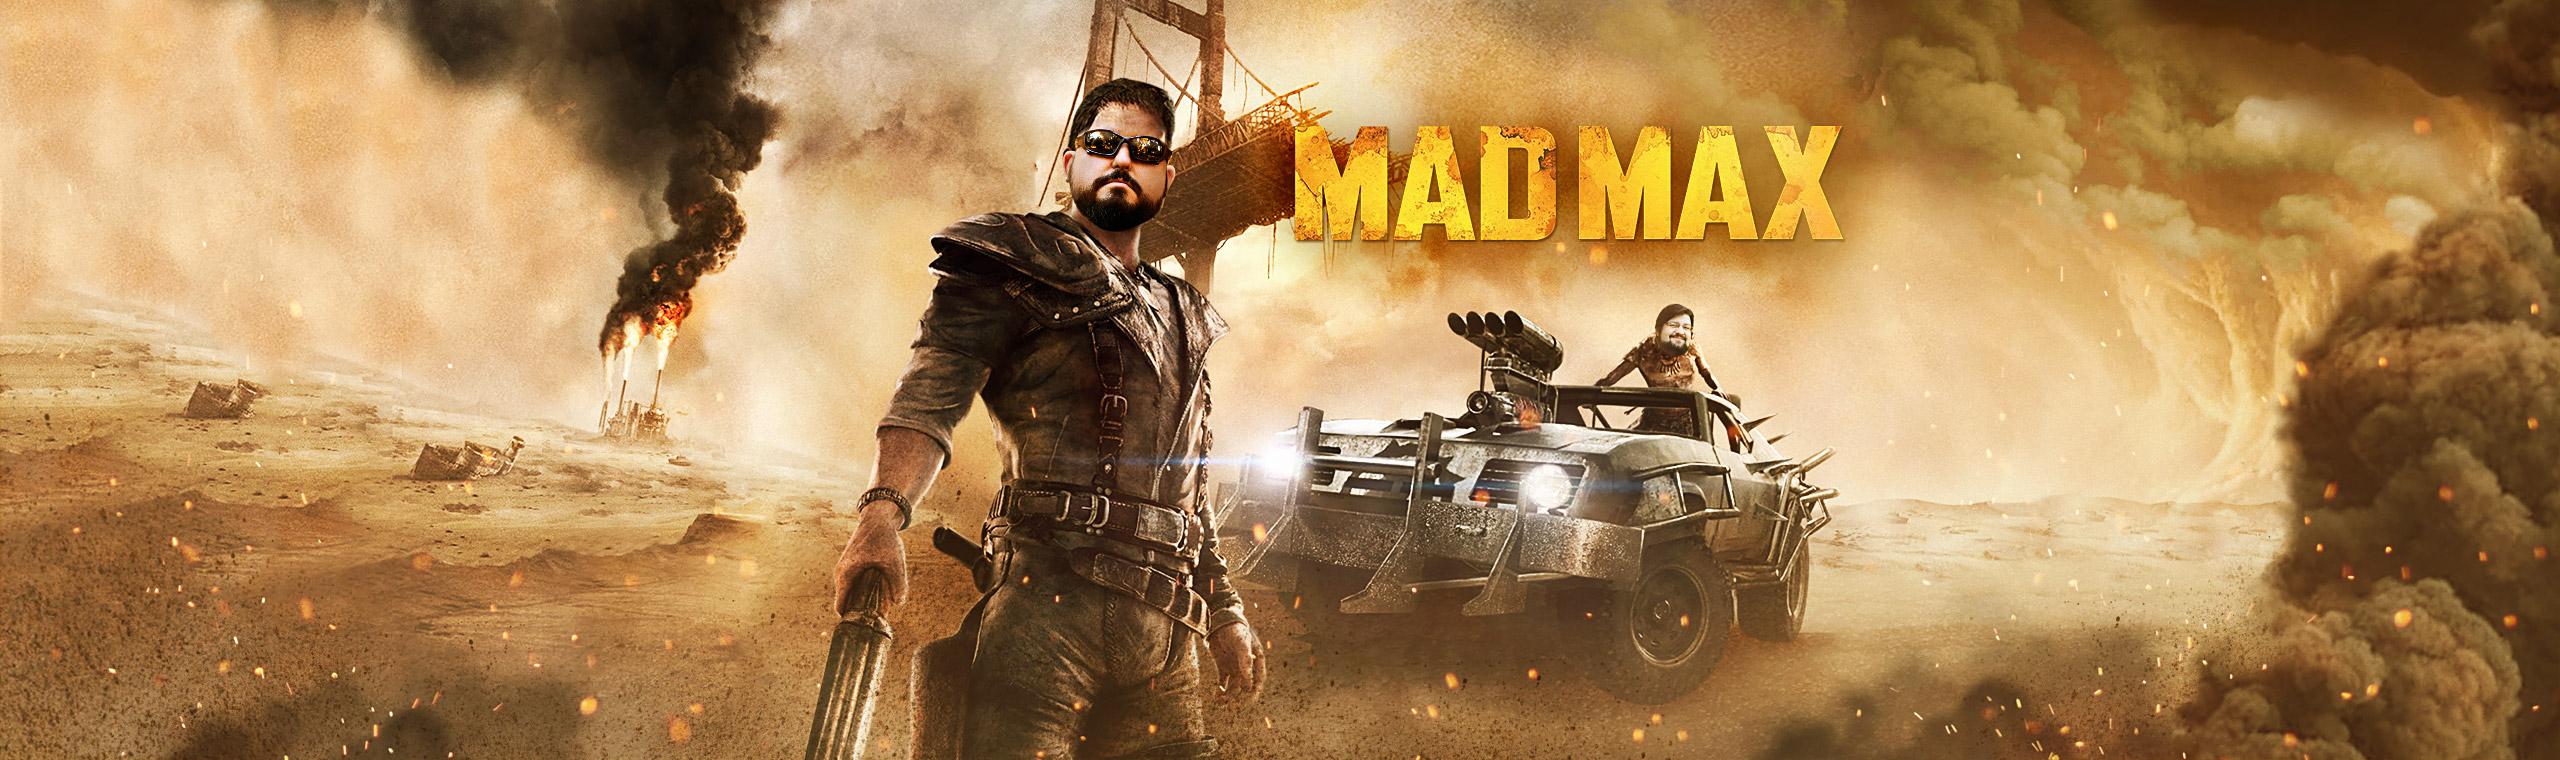 Mad Max - Missão: Chegar na missão!